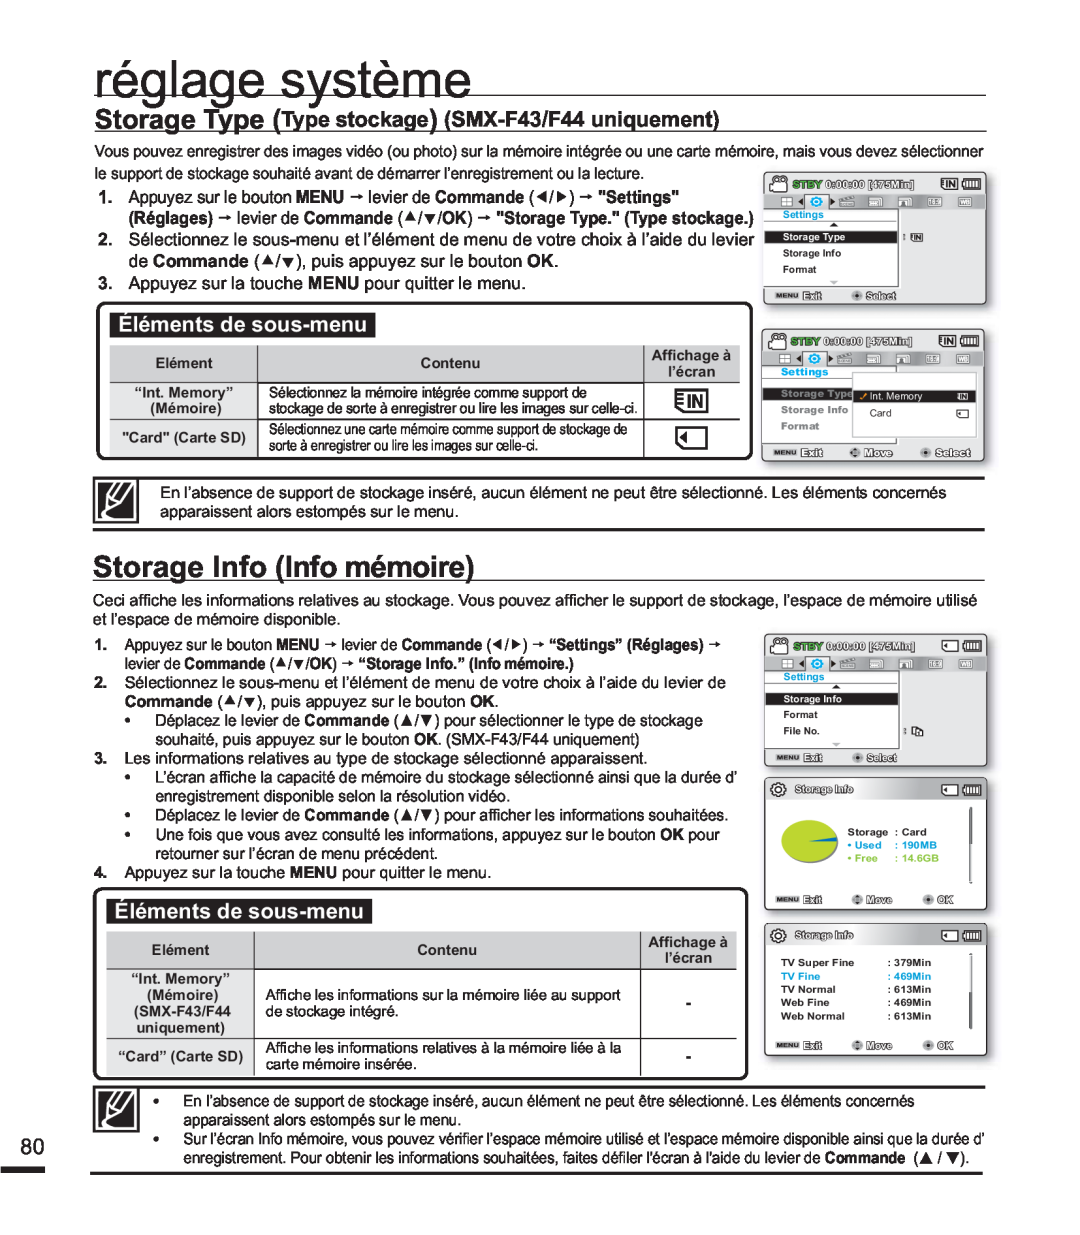 Samsung SMX-F44BP/EDC manual UpJODJHV\VWqPH, Storage Info Info mémoire, Storage Type Type stockage SMX-F43/F44 uniquement 